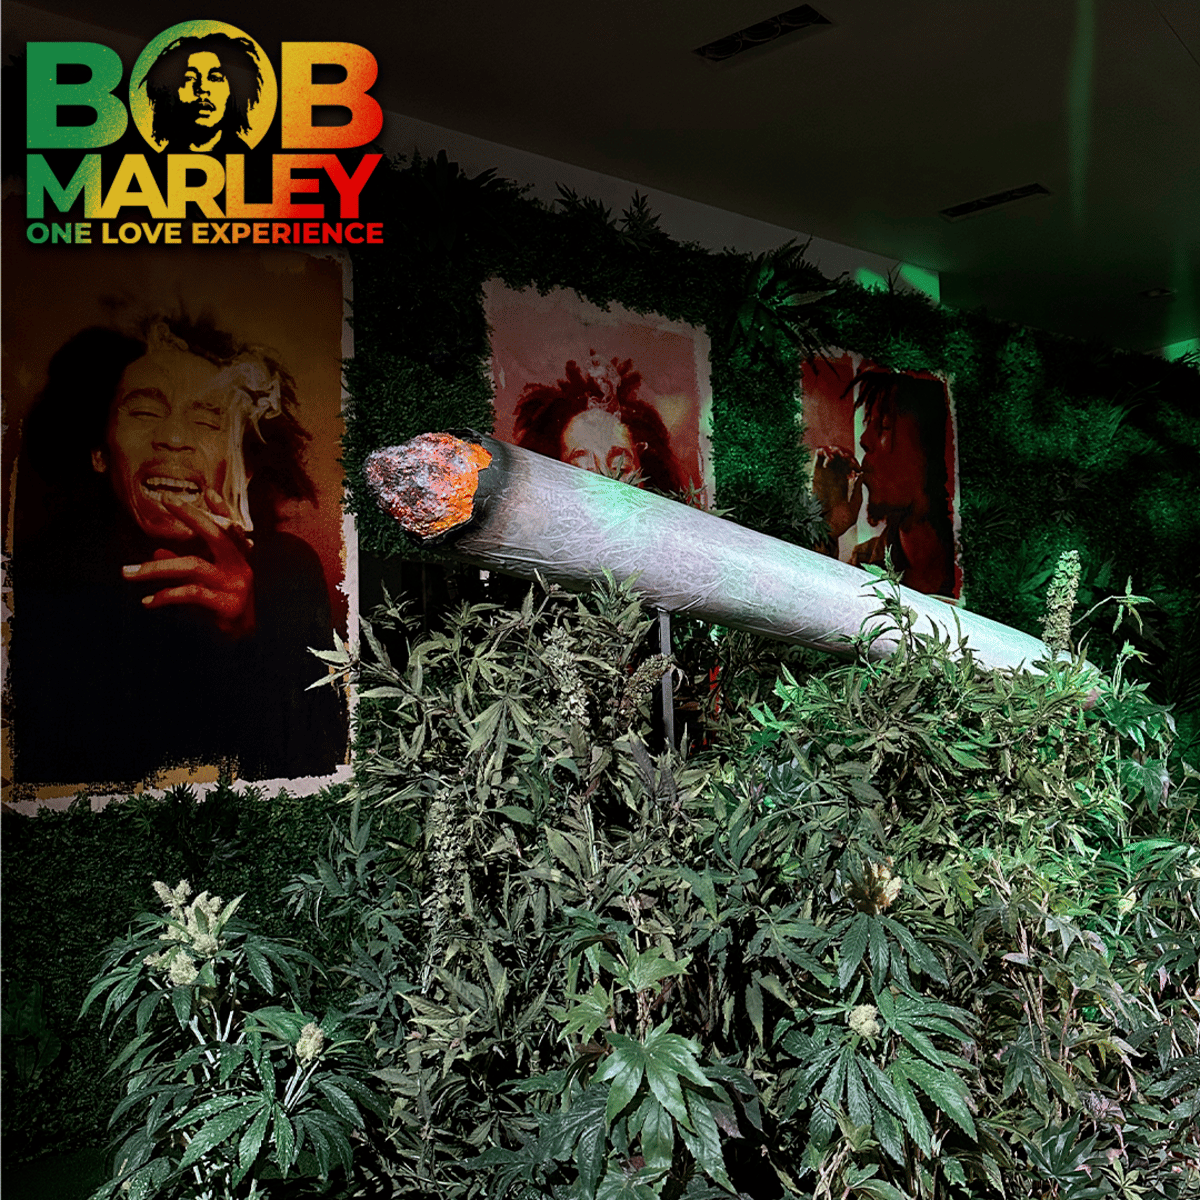 Marijuana leaves sit in the bob marley one love experience